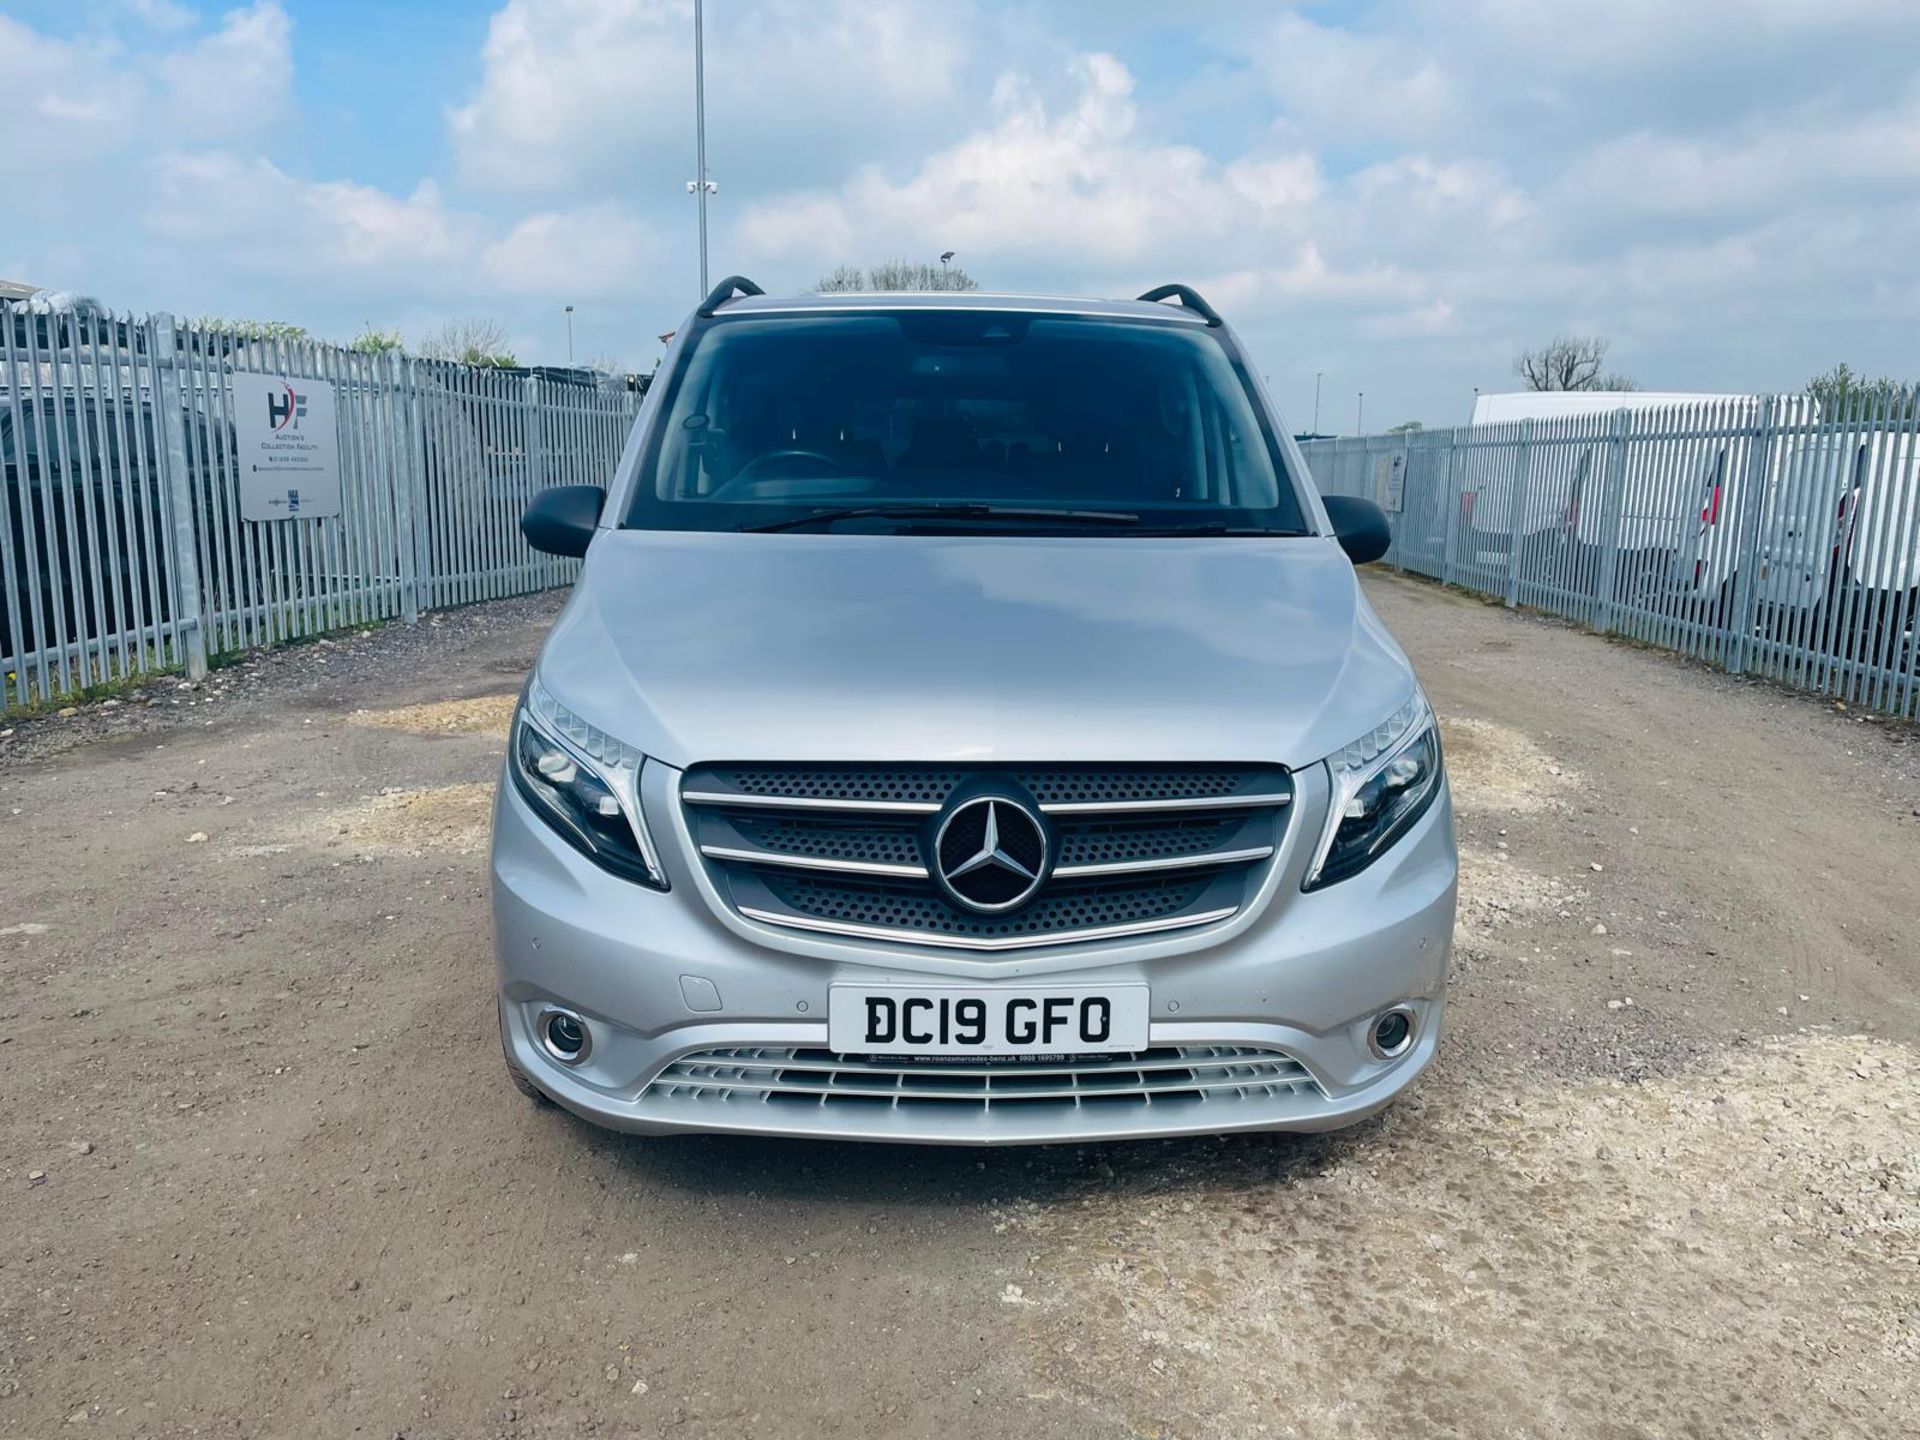 Mercedes-Benz Vito Premium 2.1 119 CDI 7G Tronic Crew Cab LWB Automatic 2019'19 Reg'- Alloy Wheels - Image 2 of 31